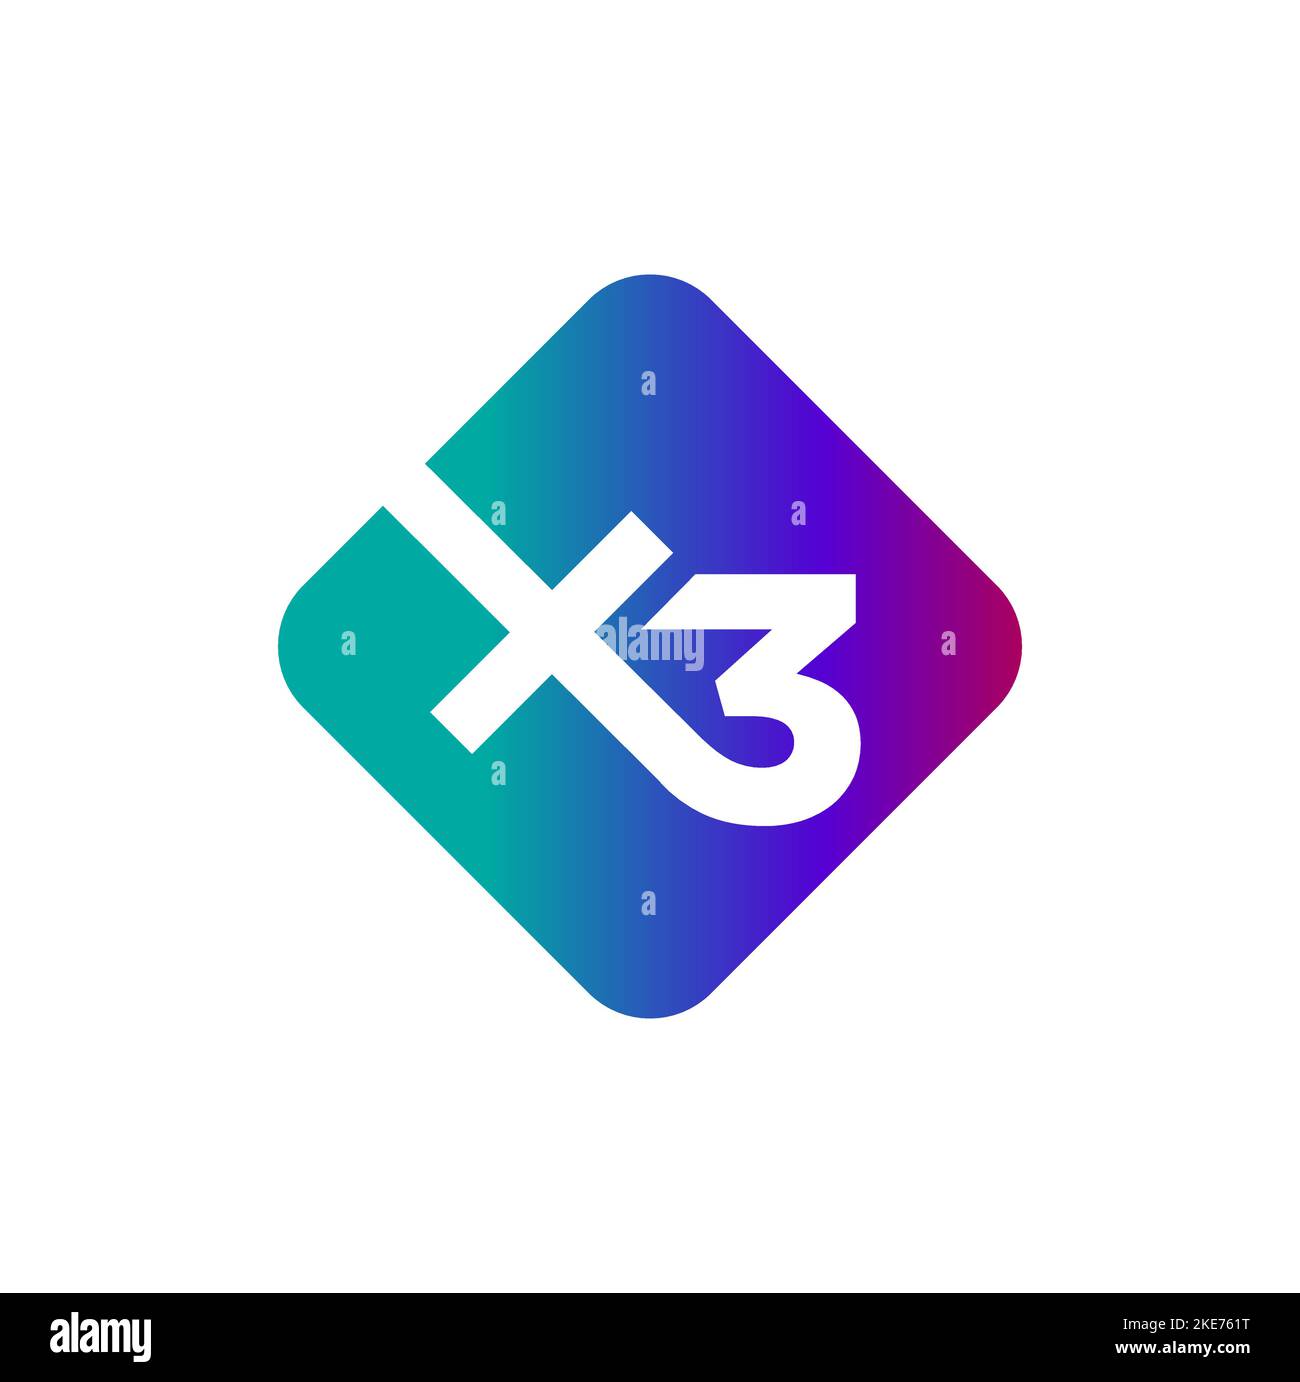 X3 unit icon. X3 monogram with multicolor . Stock Vector